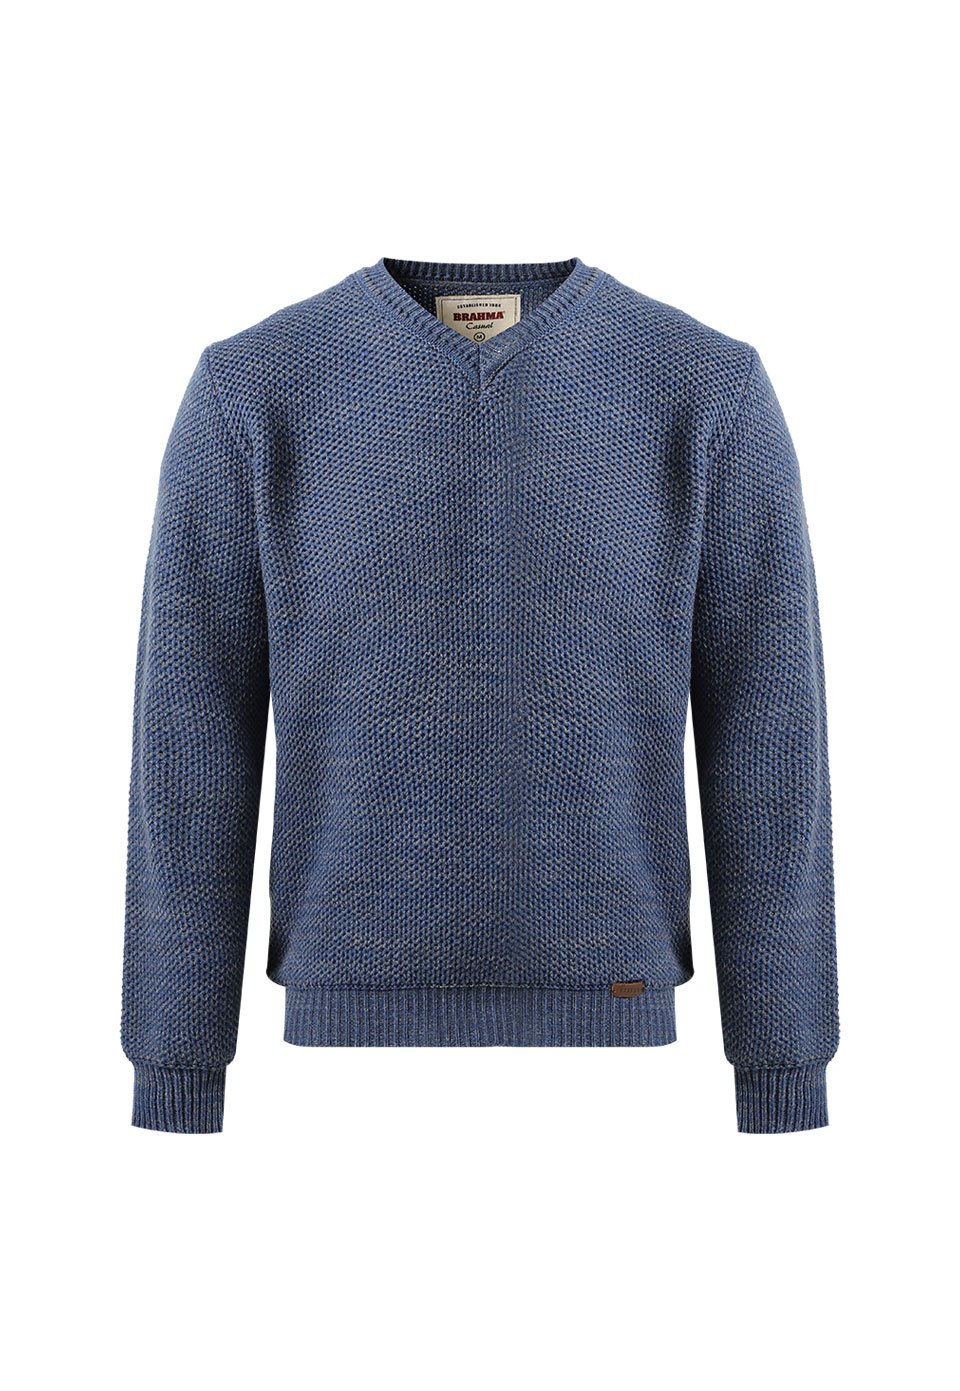 SWE0104-AZU Sweater Hombre